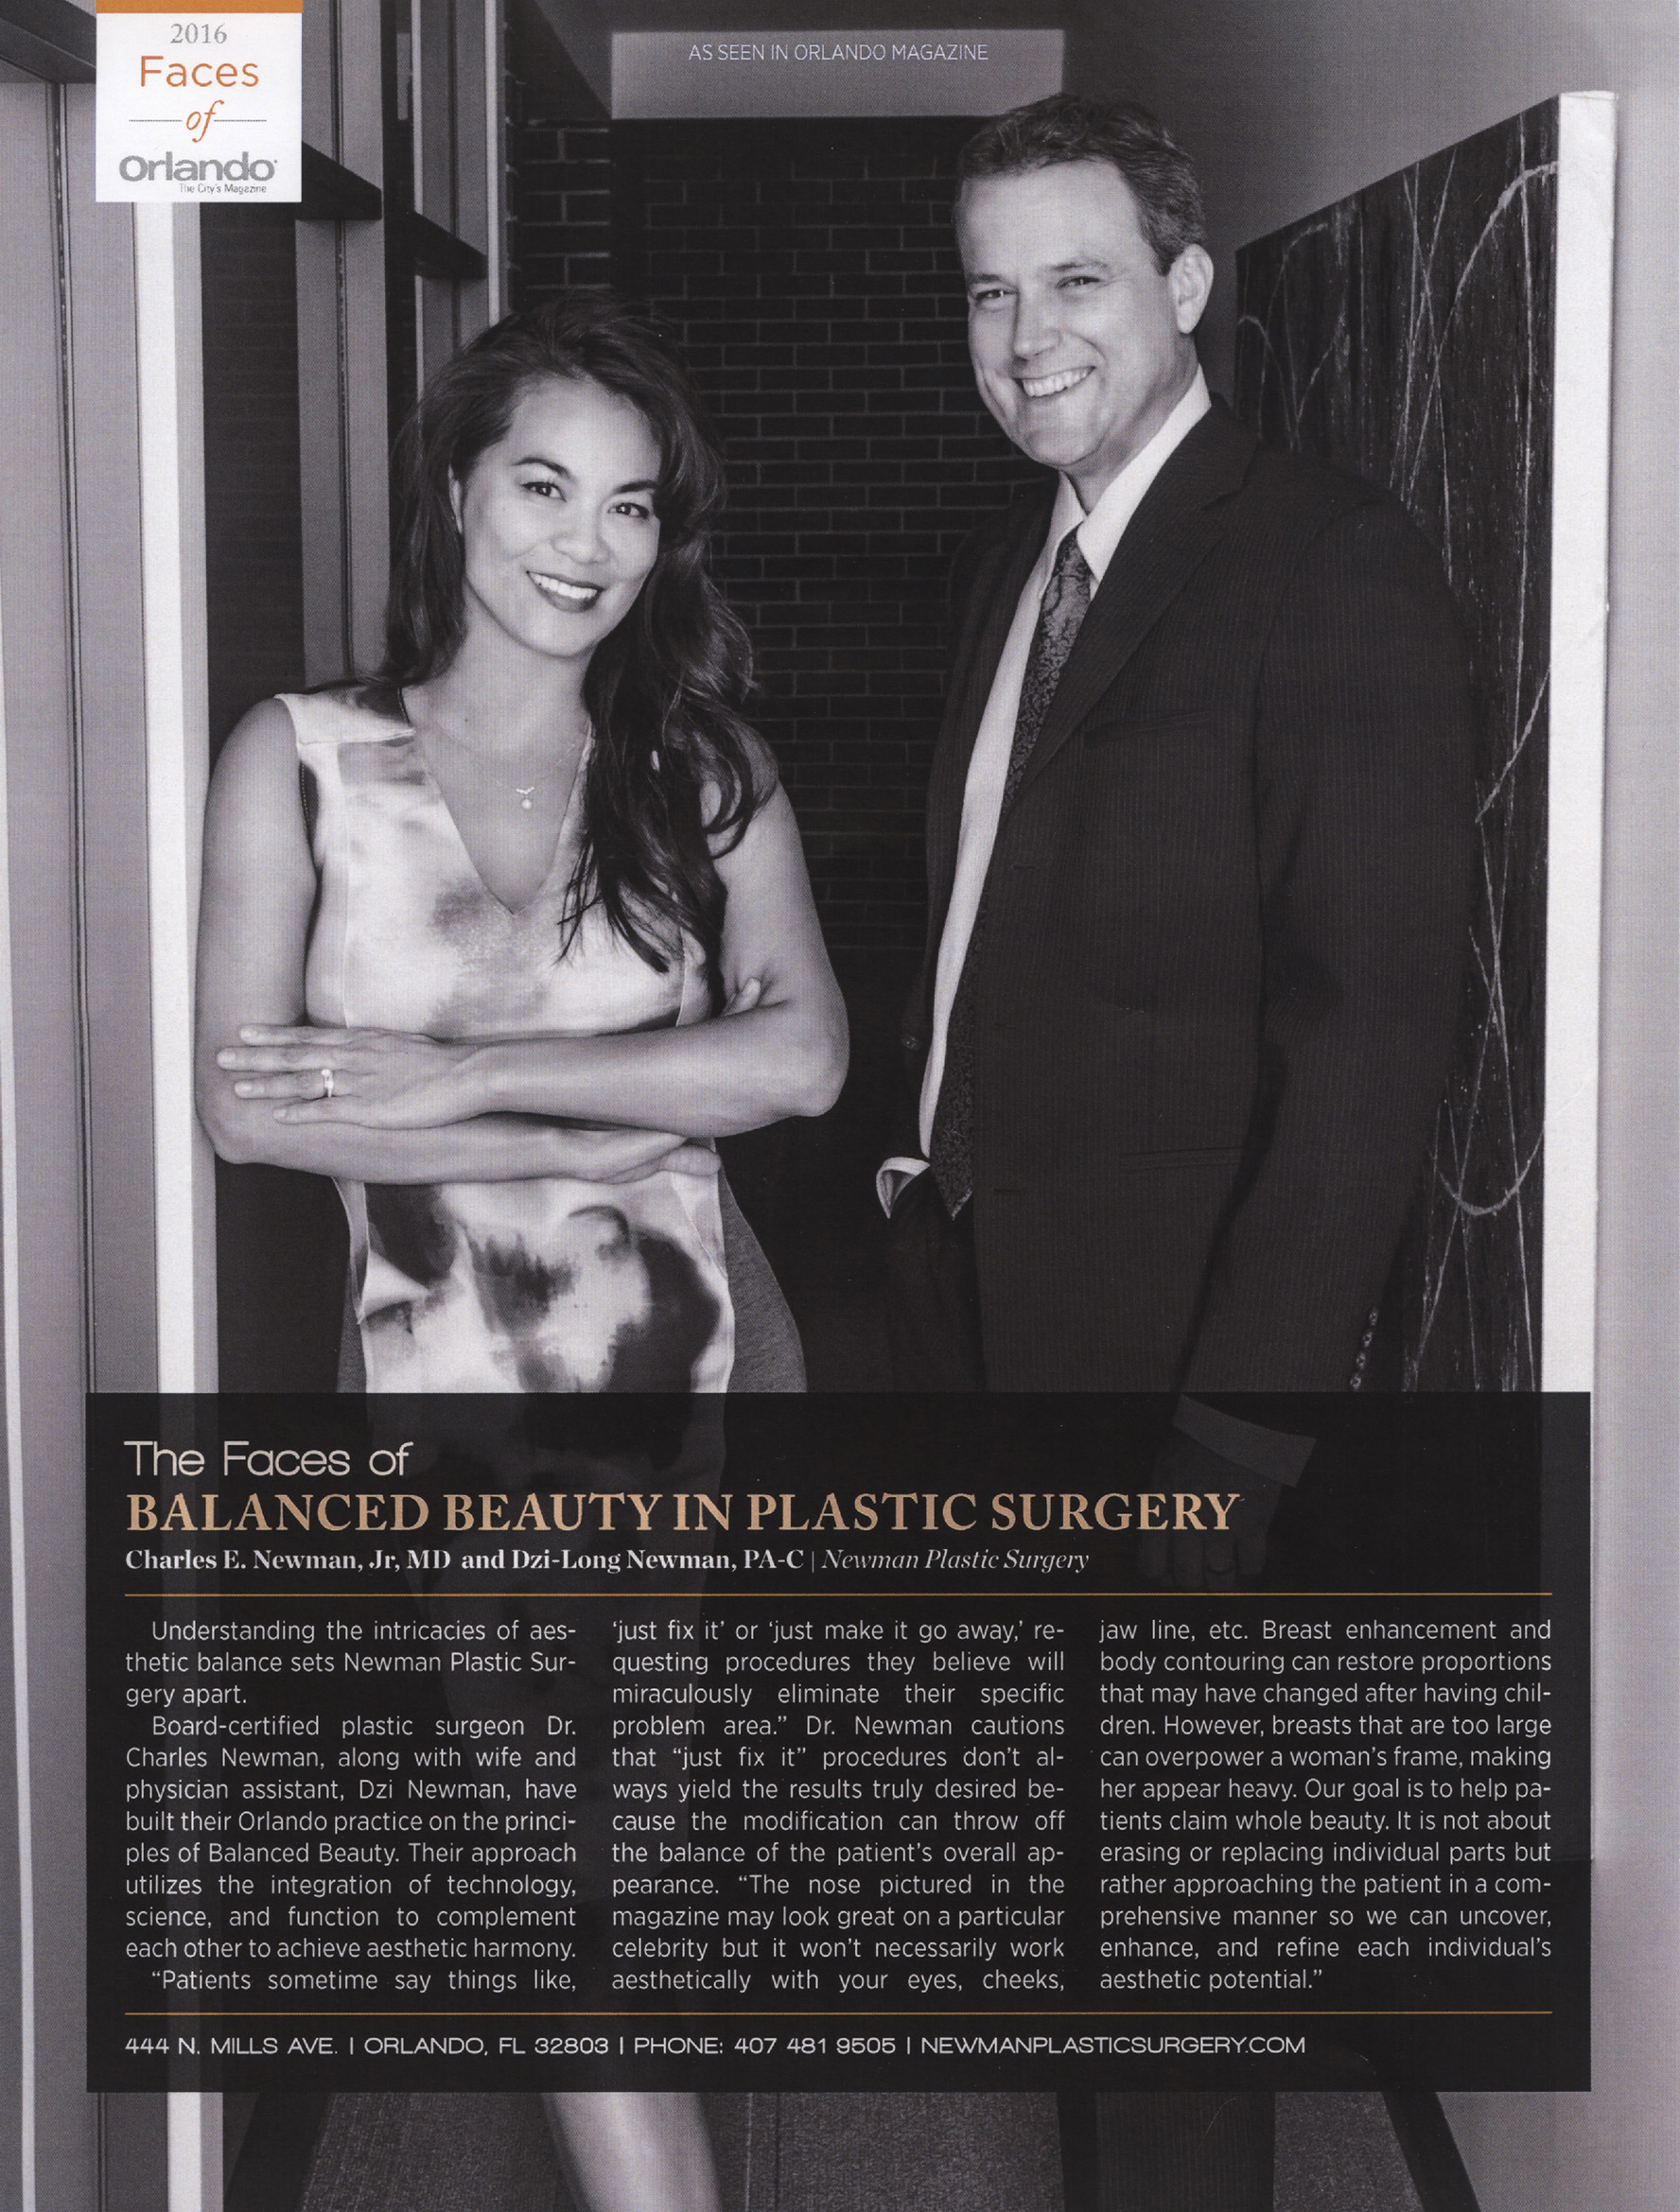 Balanced Beauty in Plastic Surgery